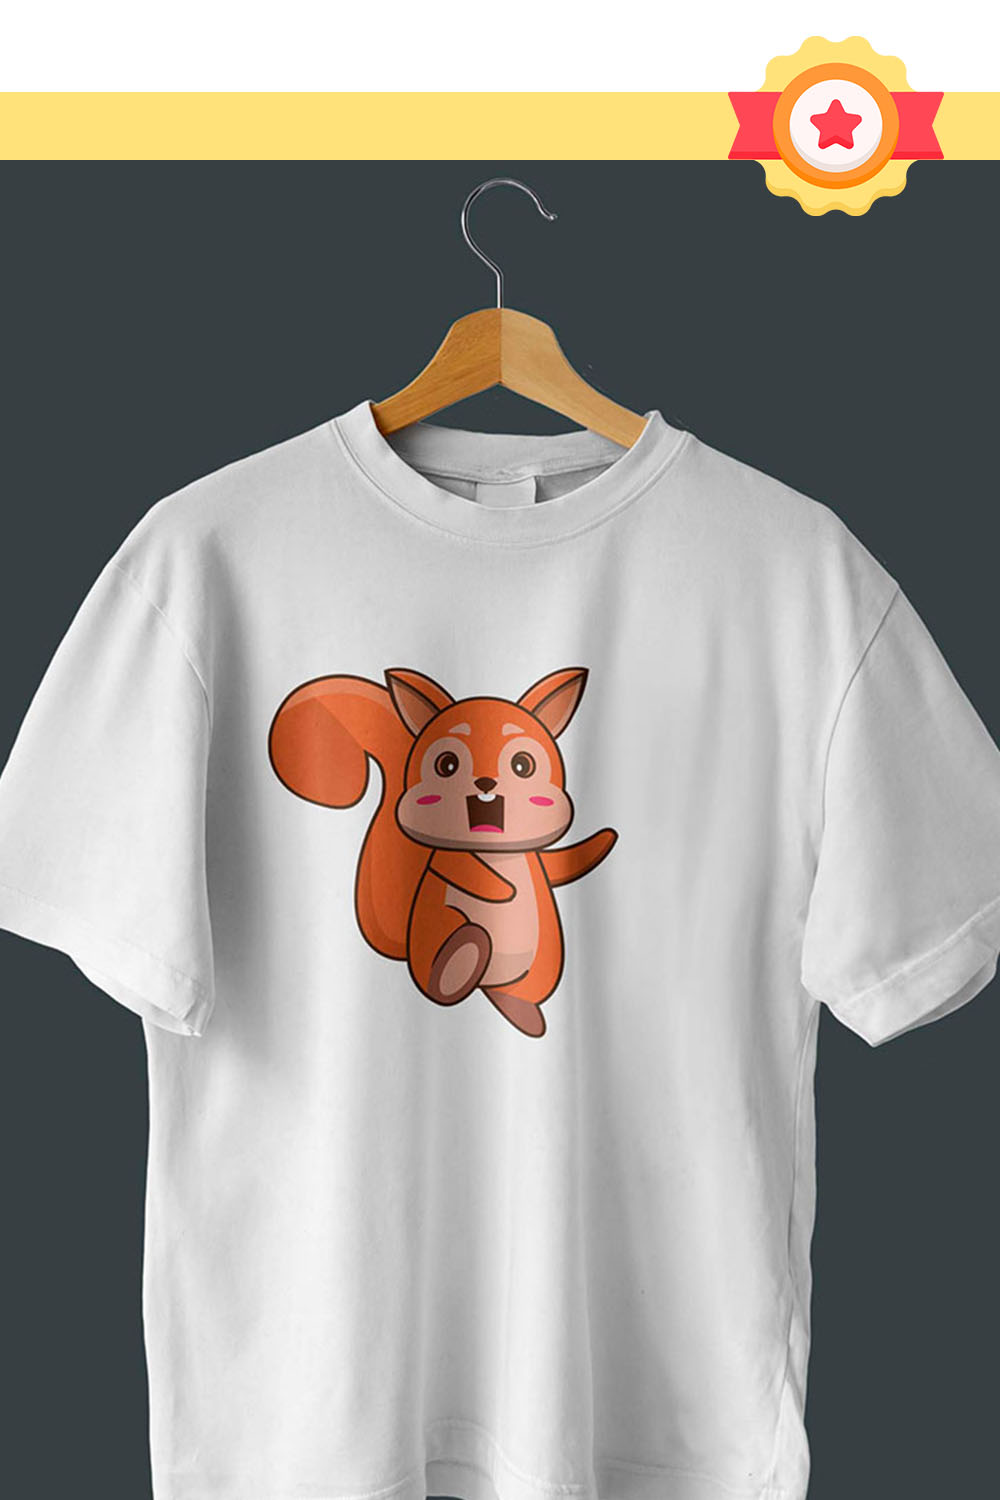 Cute Squirrel Illustration T-Shirt Design Pinterest image.